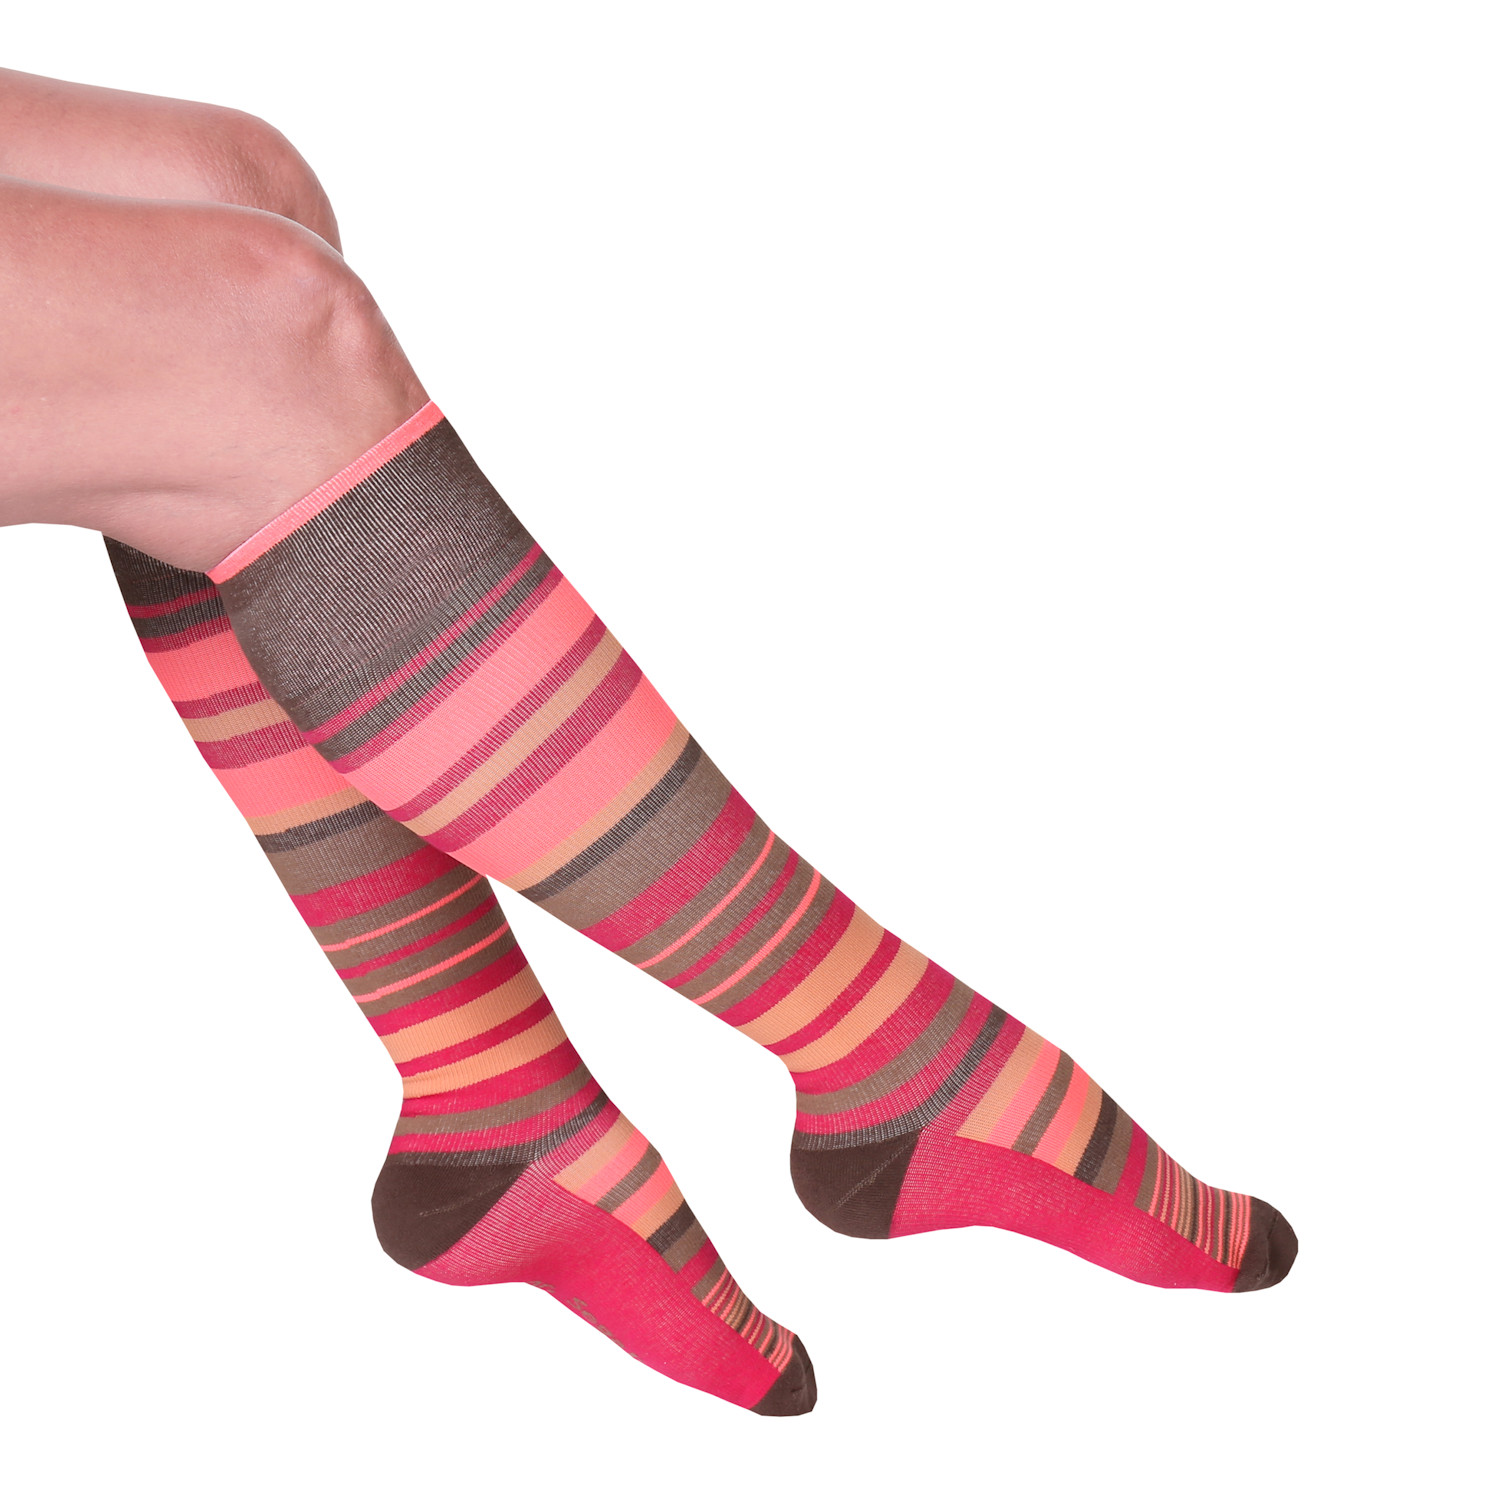 Dr. Segal's Unisex Firm Compression Knee High Socks | Support Plus